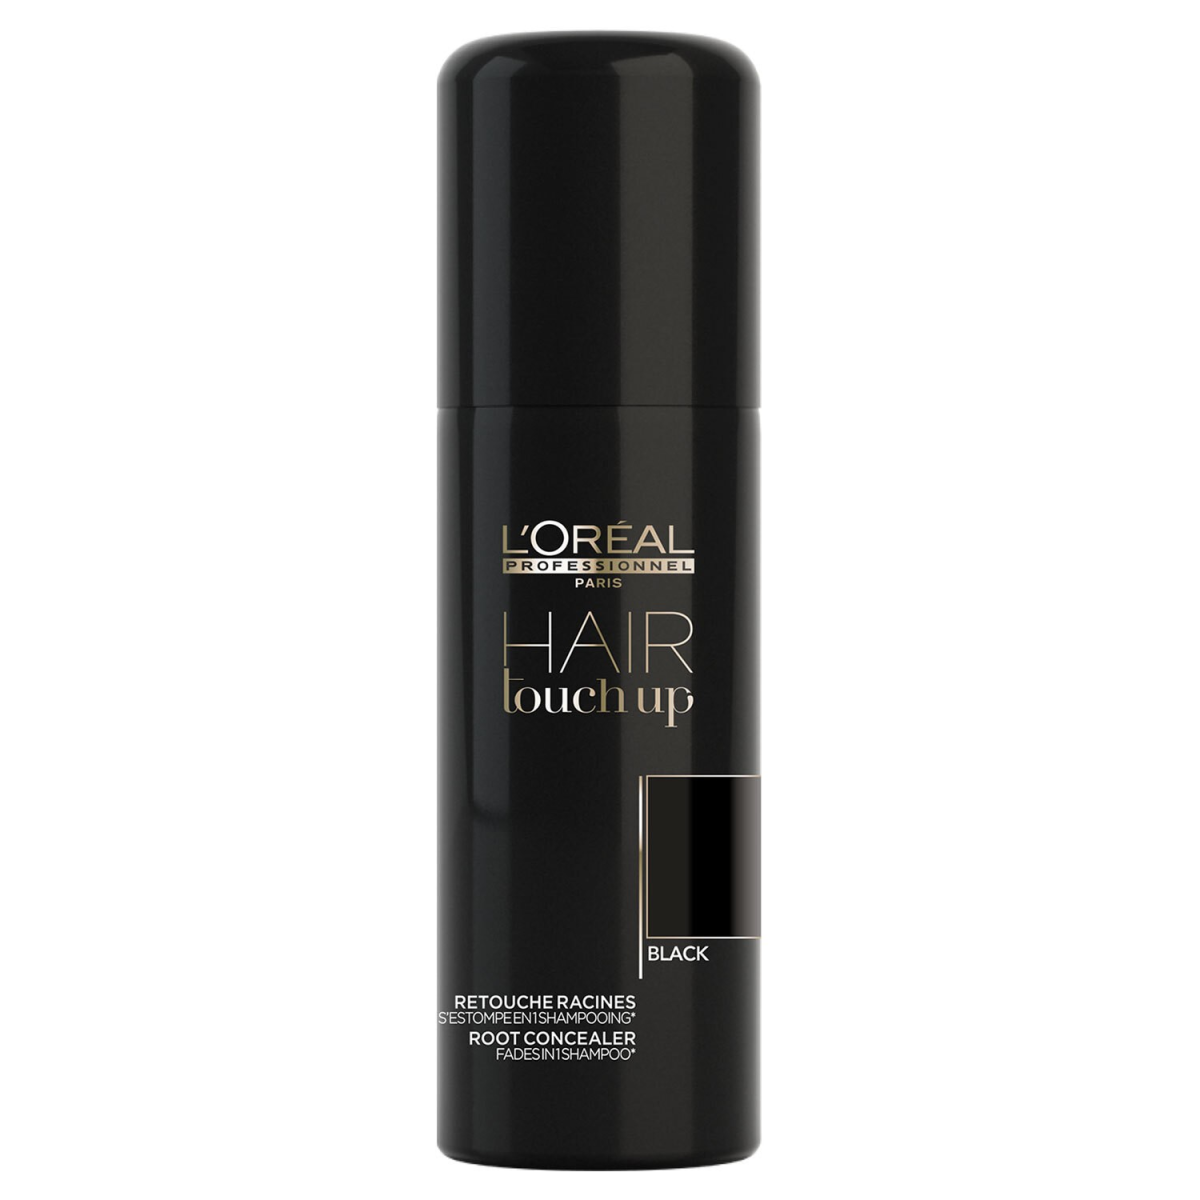 L'OREAL PROFESSIONNEL - HAIR TOUCH UP - BLACK (75ml) Spray correttore colore